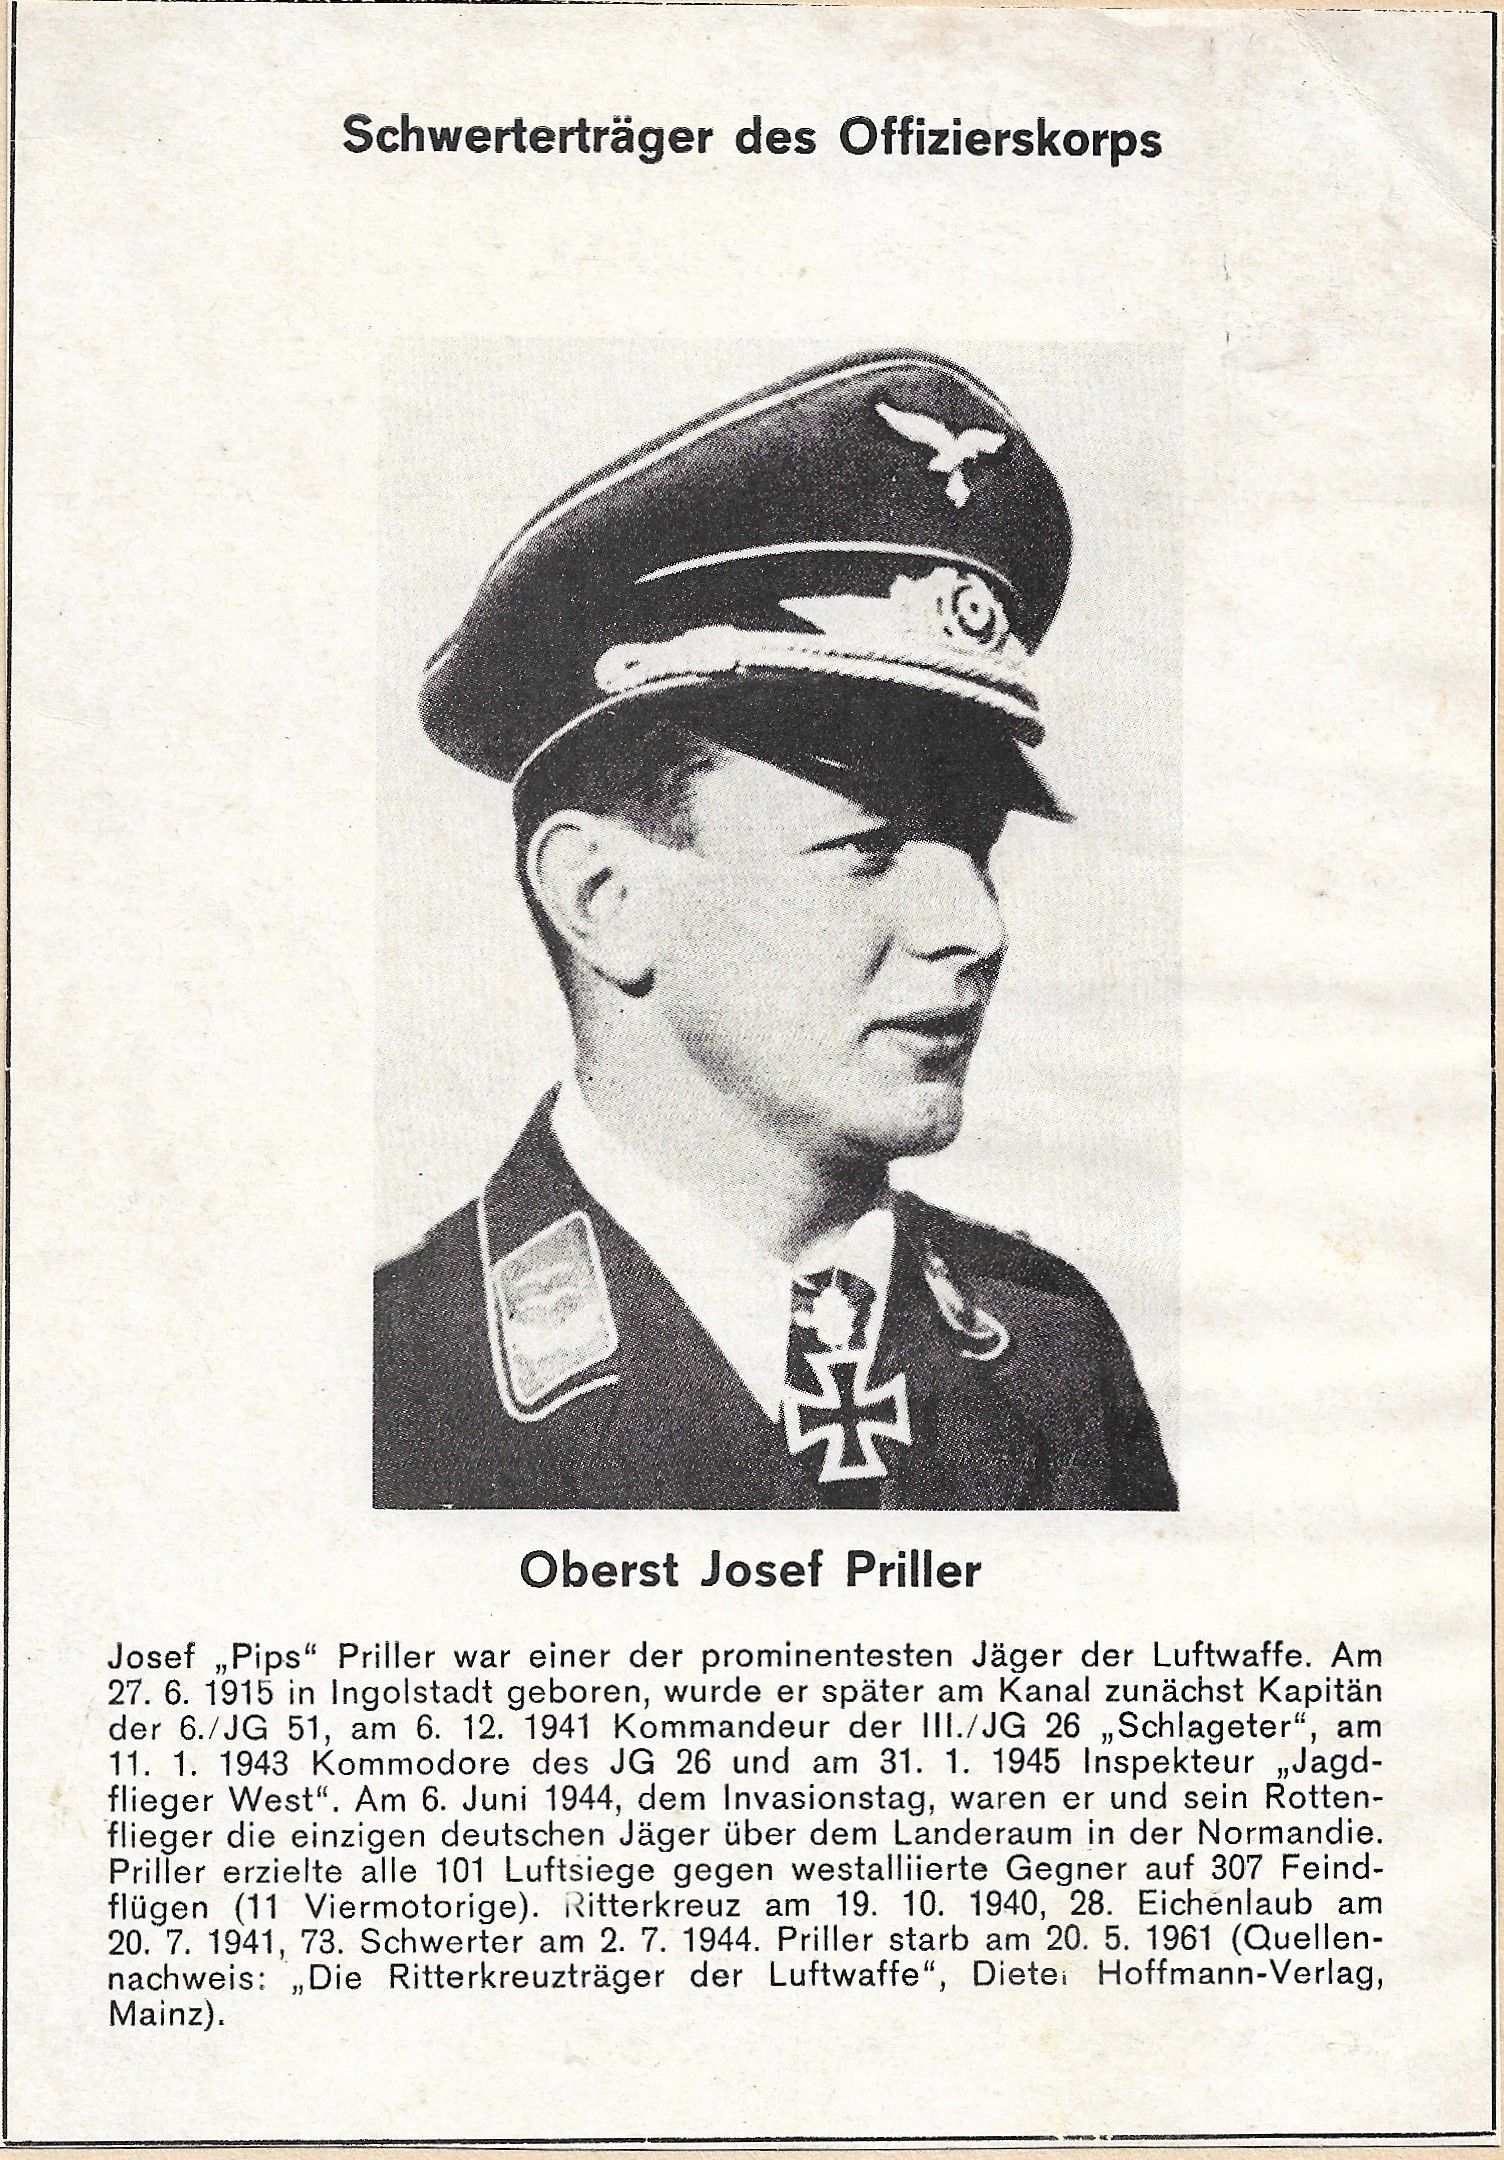 Oberst Josef Priller